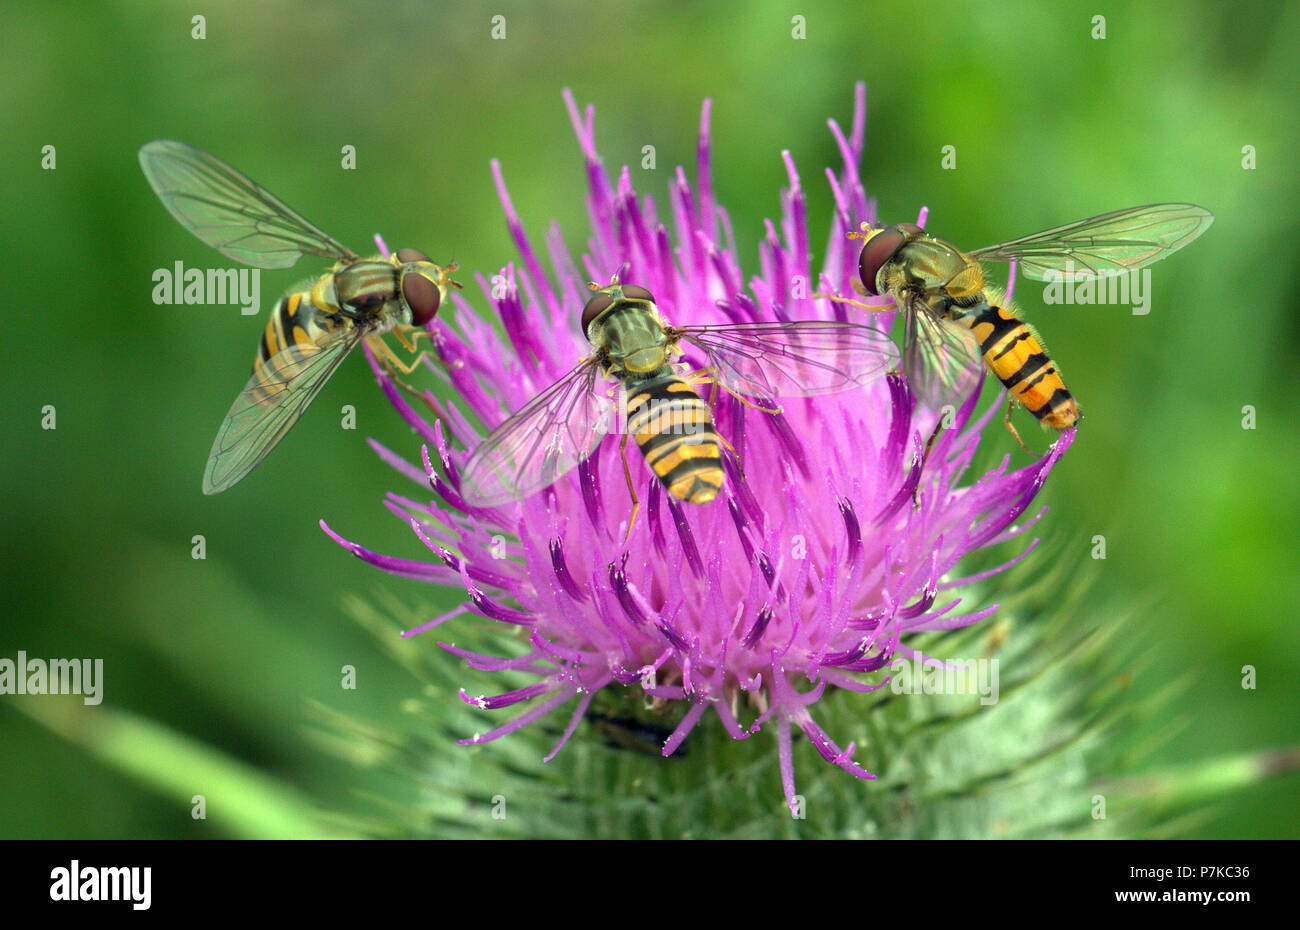 Three Hover Flies (Syrphidae) feeding on Nectar on a Milk Thistle plant. Stock Photo